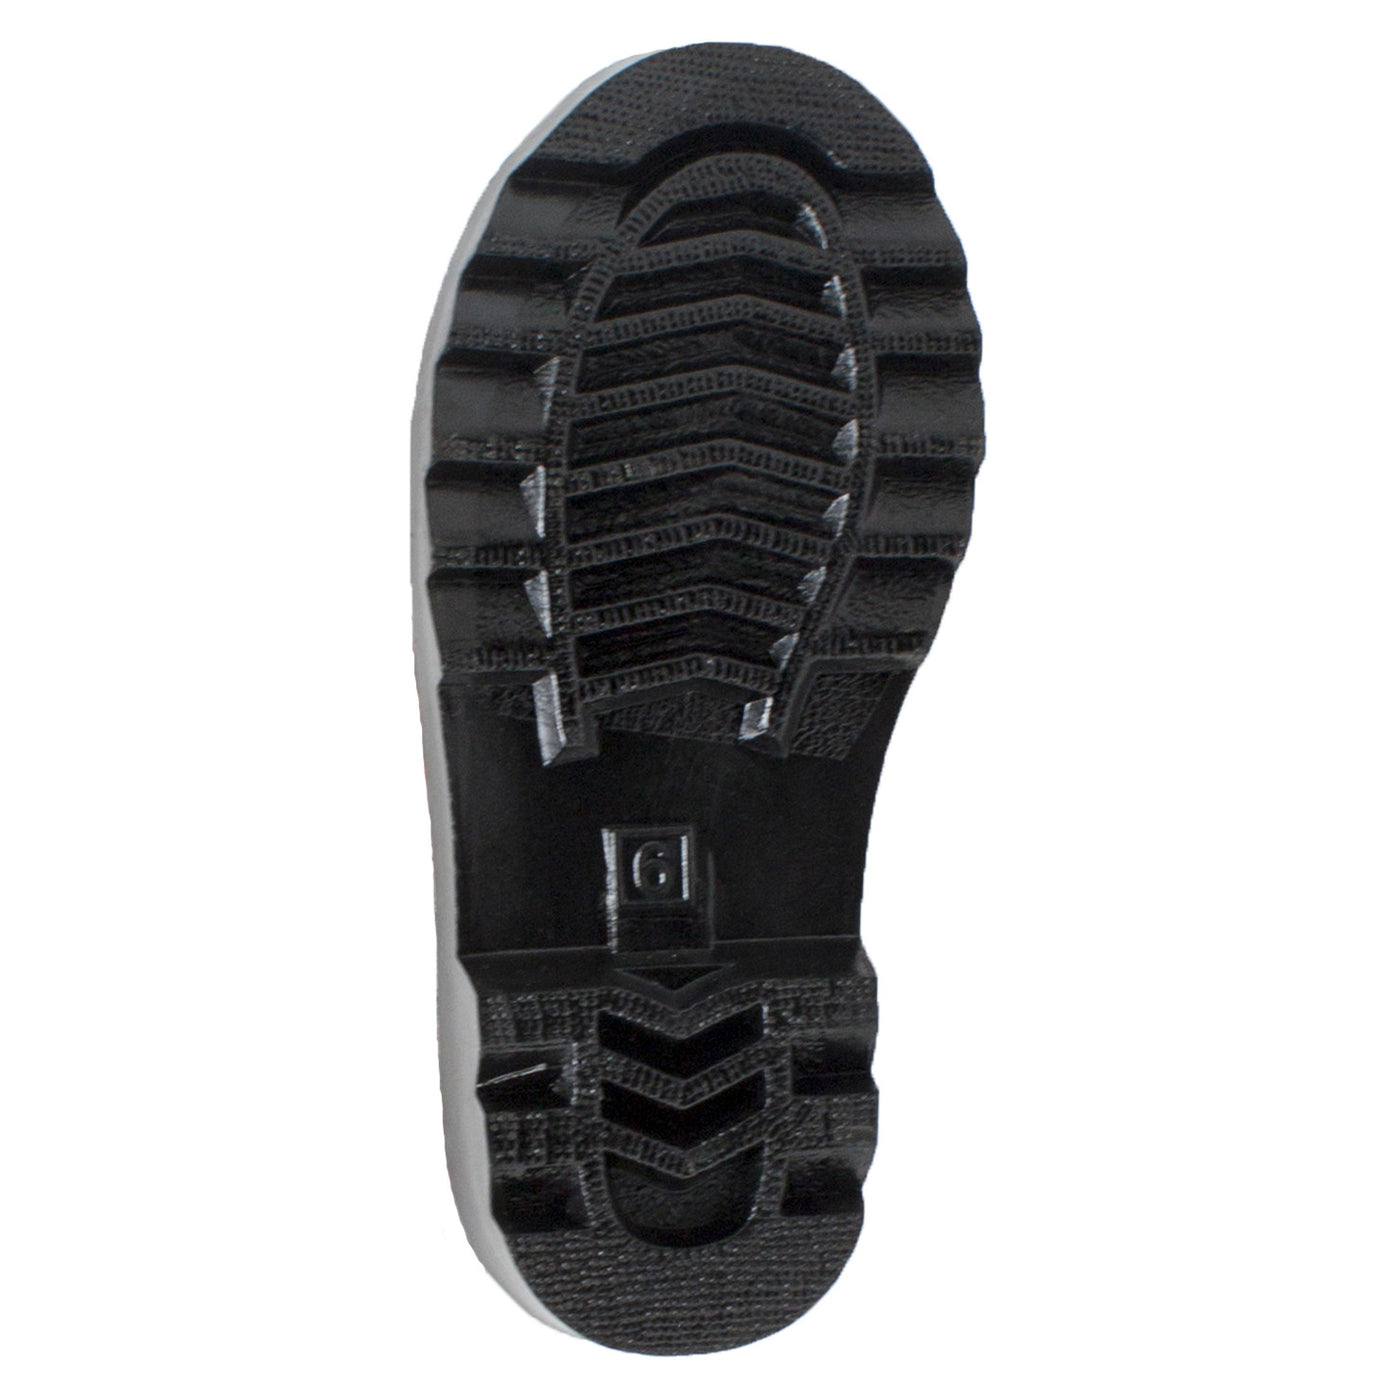 Children's 3D "Big Red" Rubber Boot Black - CI-4003 - Shop Genuine Leather men & women's boots online | AdTecFootWear